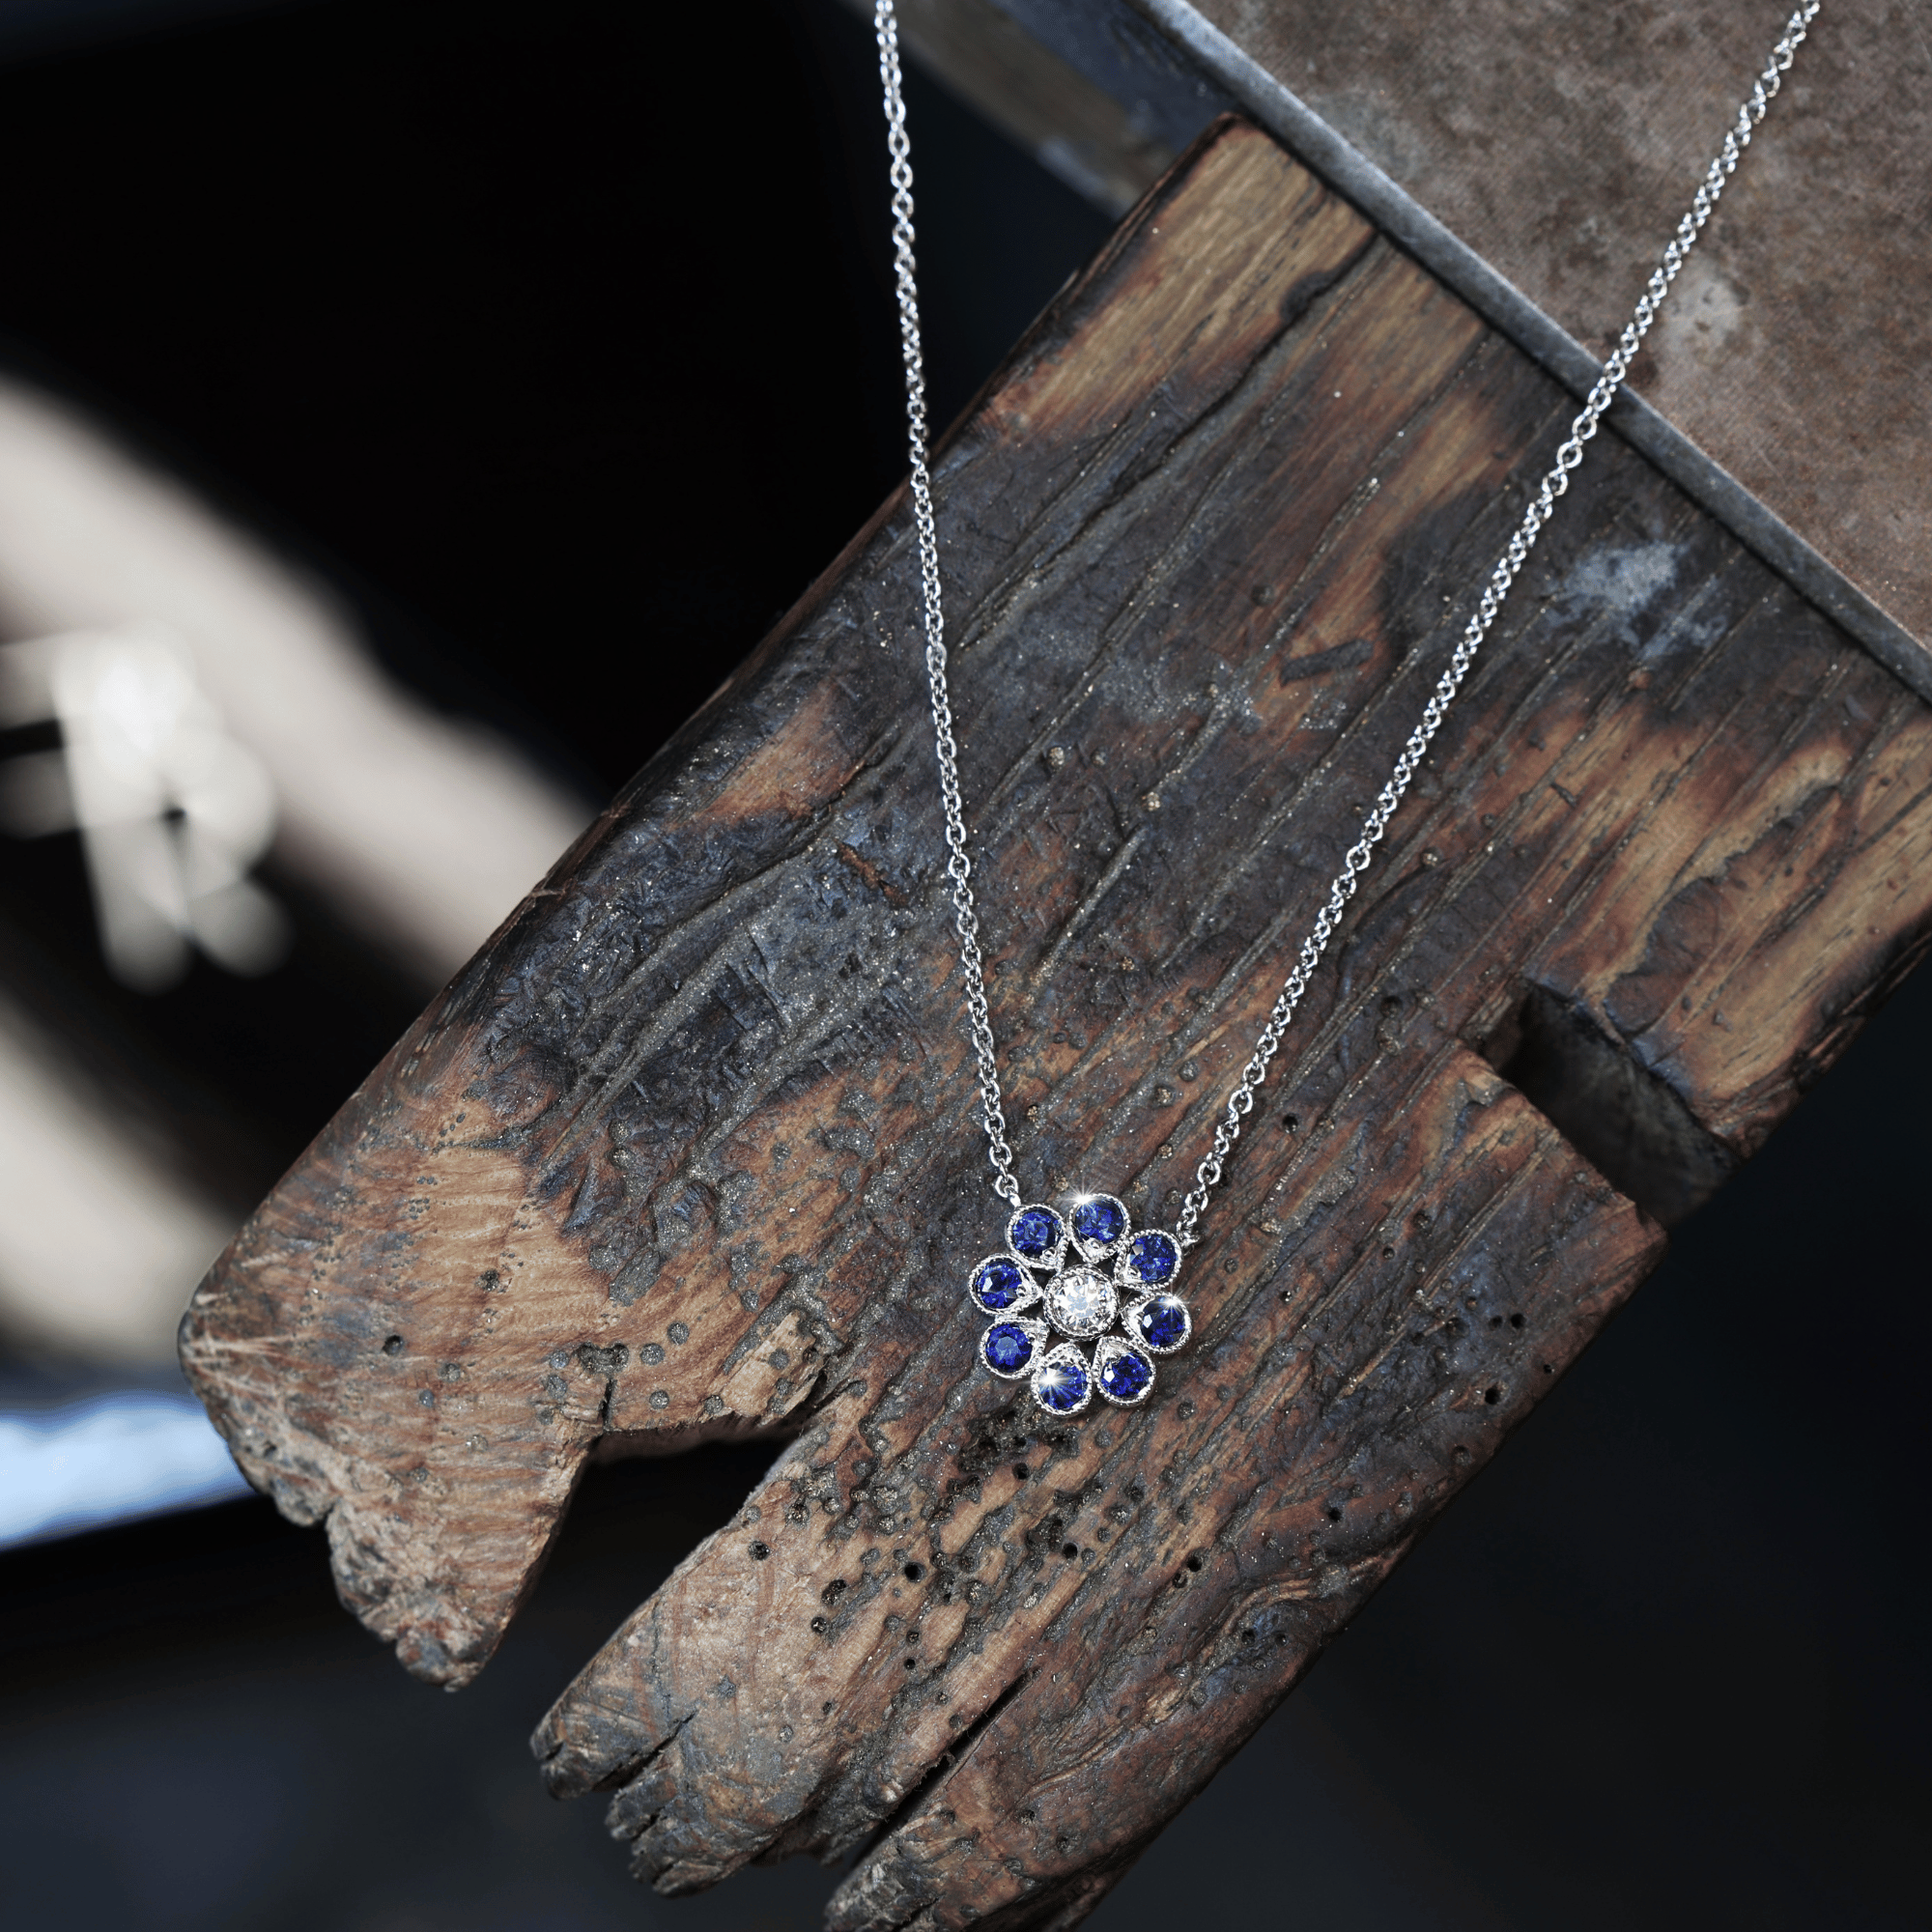 Deco Daisy Large Ceylon Sapphire & Diamond Necklace - 18ct White Gold